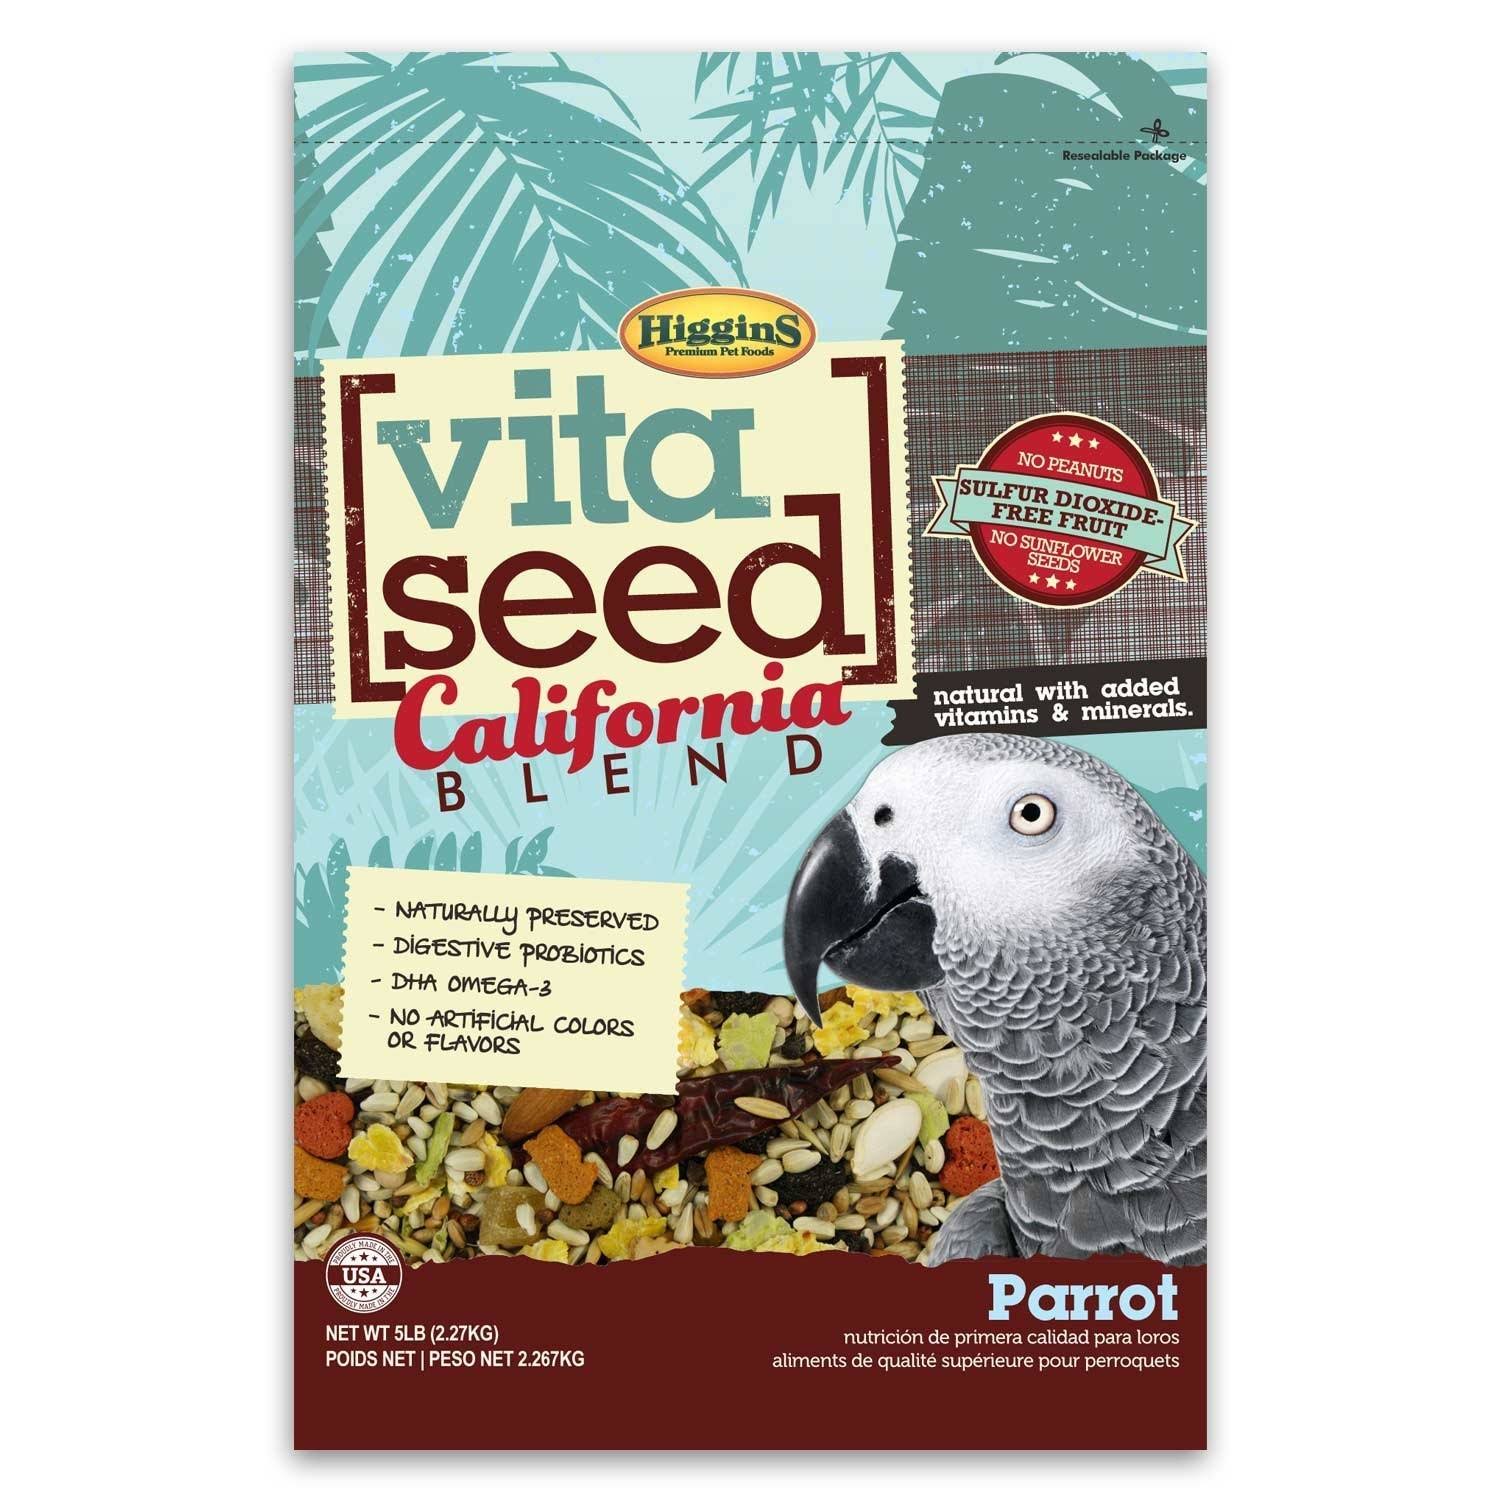 Higgins Vita Seed Parrot Bird Food - California Blend, 5lb